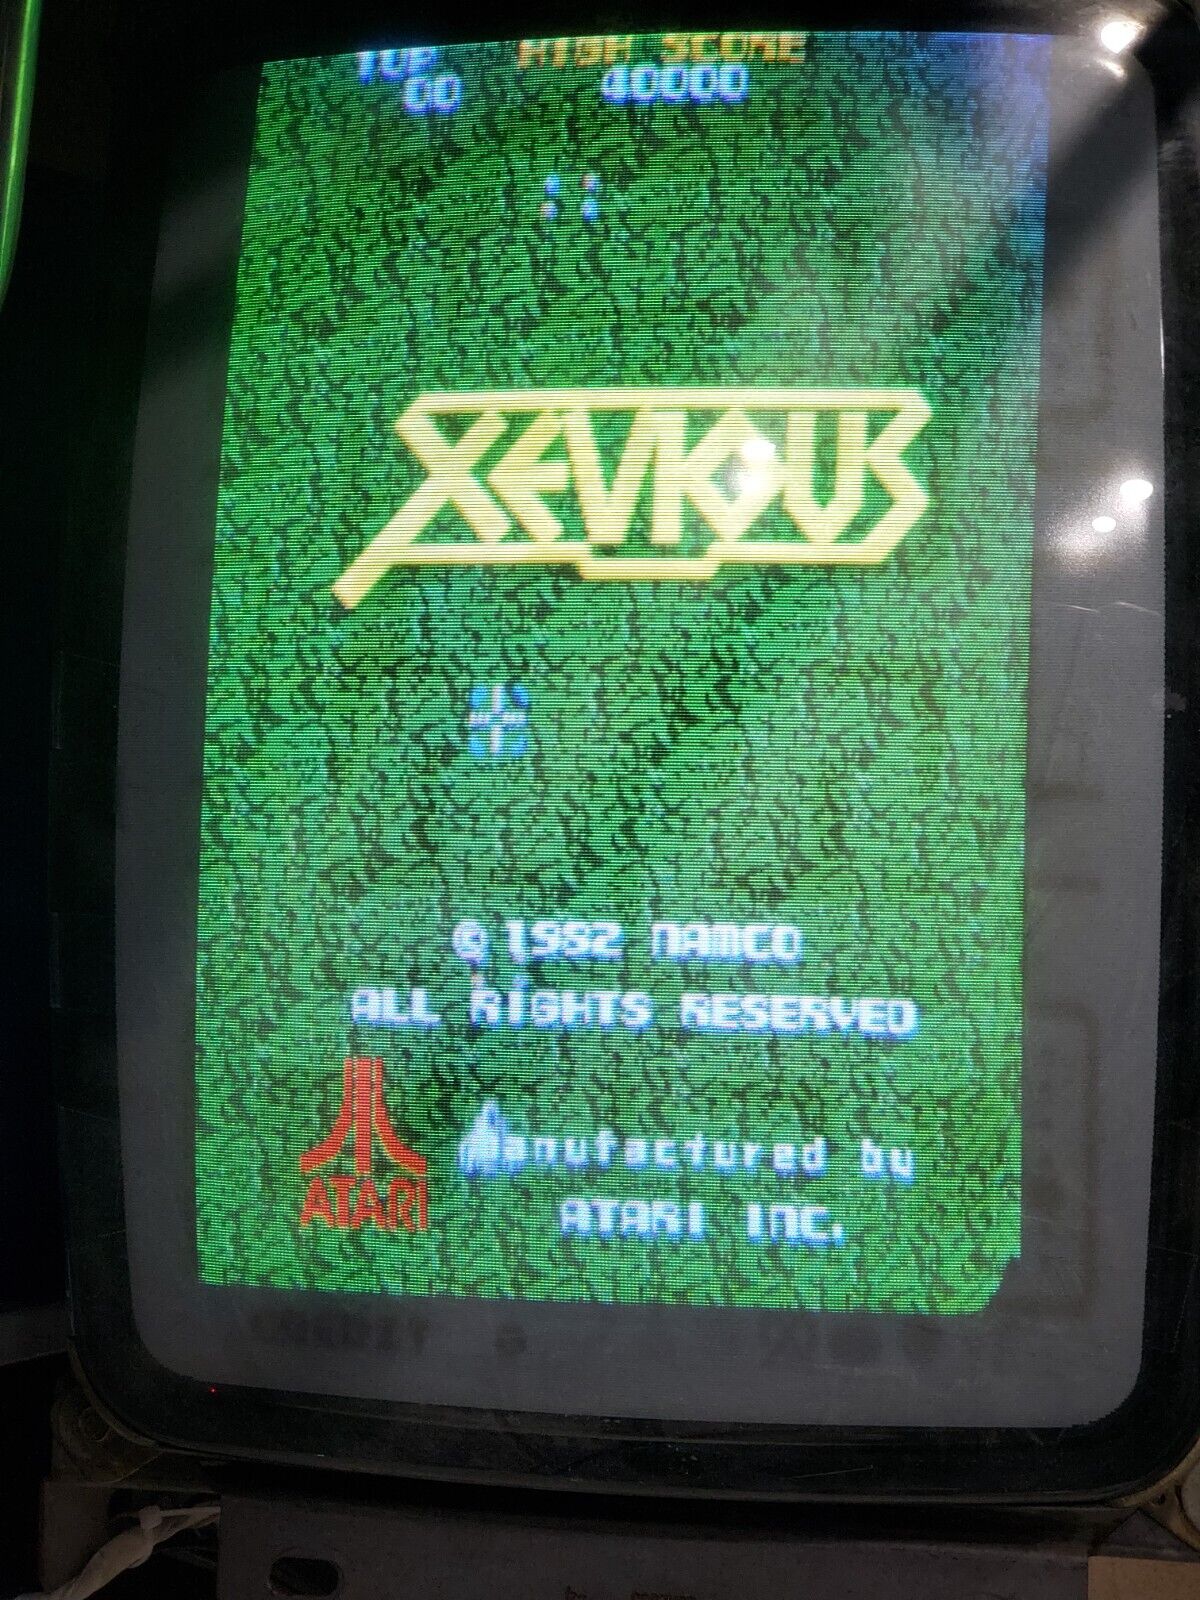 For Atari Xevious Arcade Coin-op CPU PCB board - repair and upgrade service.